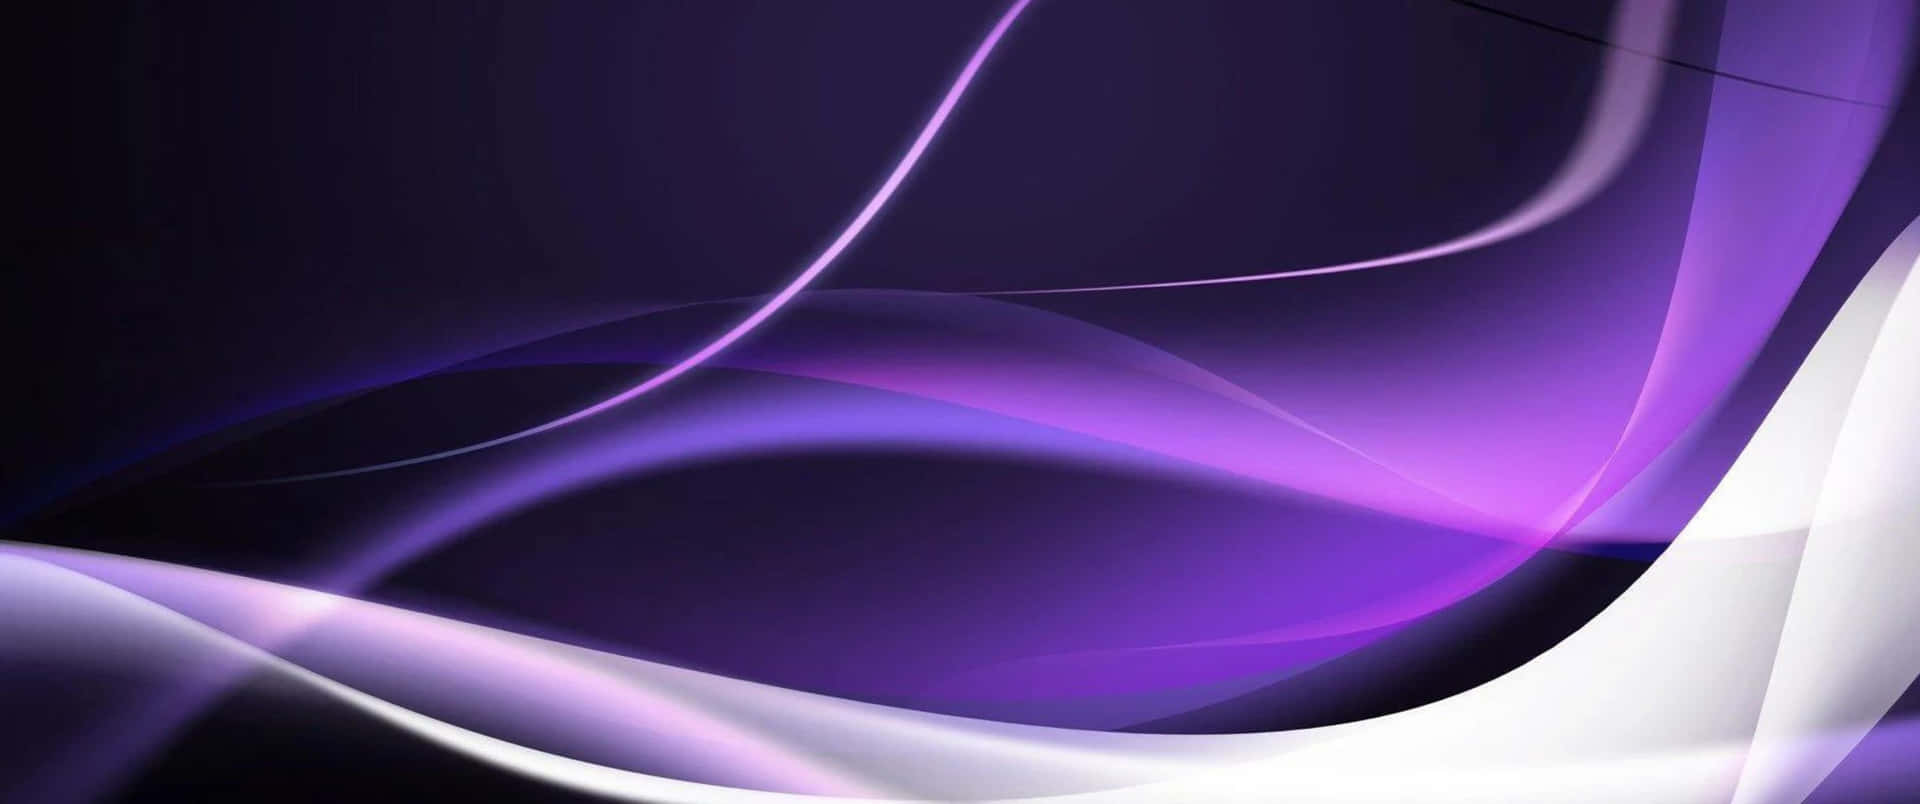 purple white background